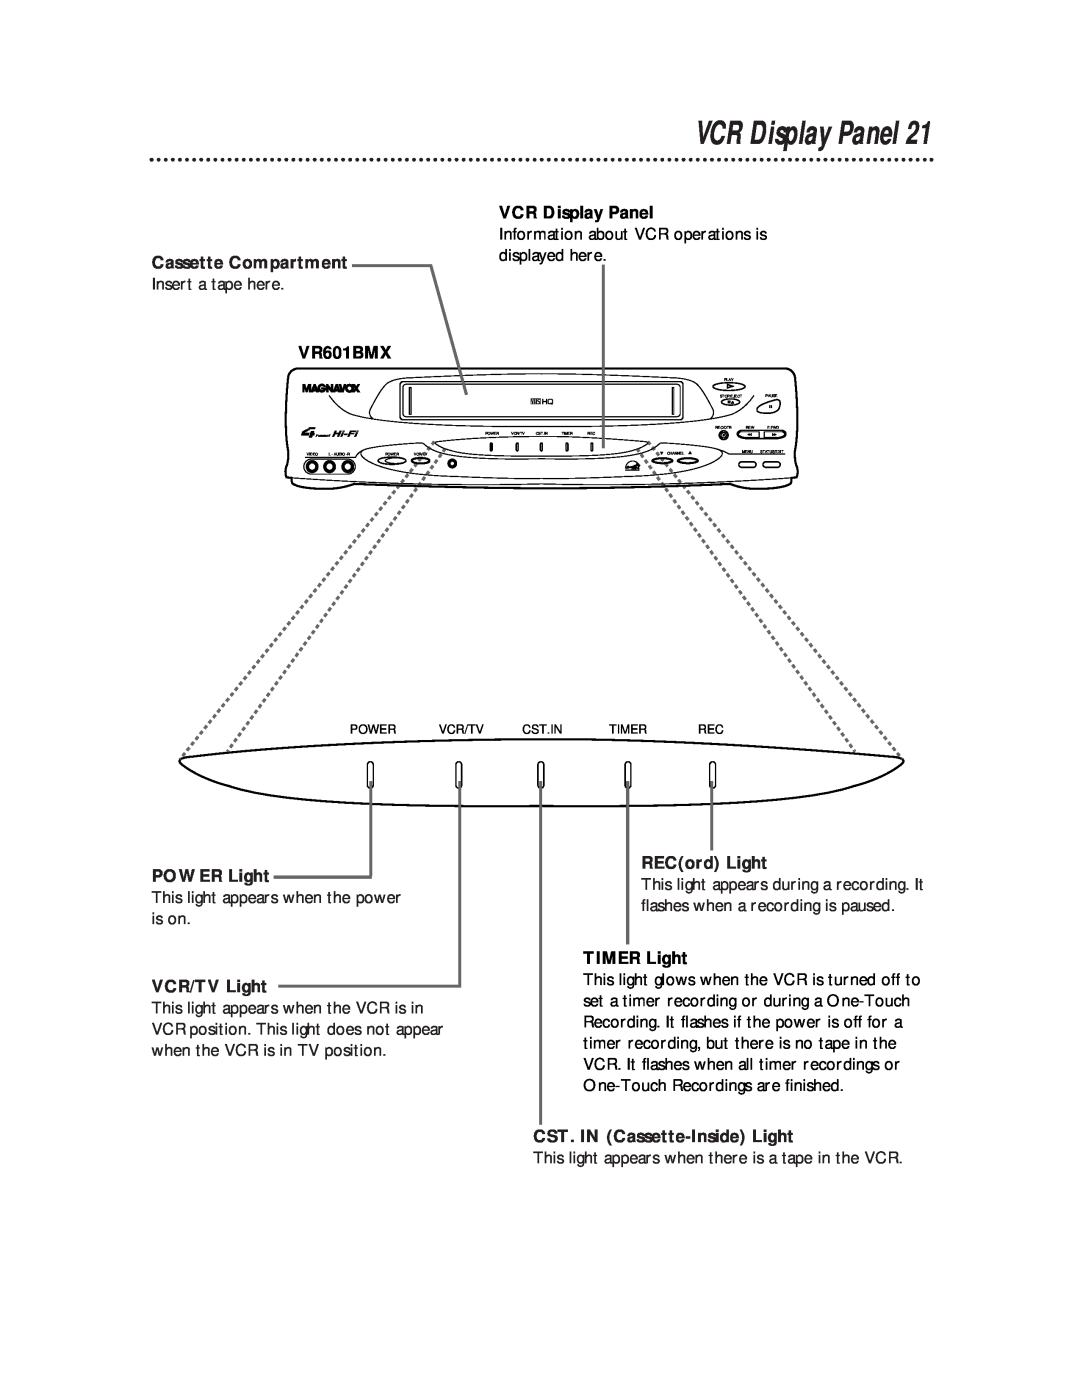 Magnavox VR601BMX VCR Display Panel, Cassette Compartment, Insert a tape here, POWER Light, VCR/TV Light, RECord Light 